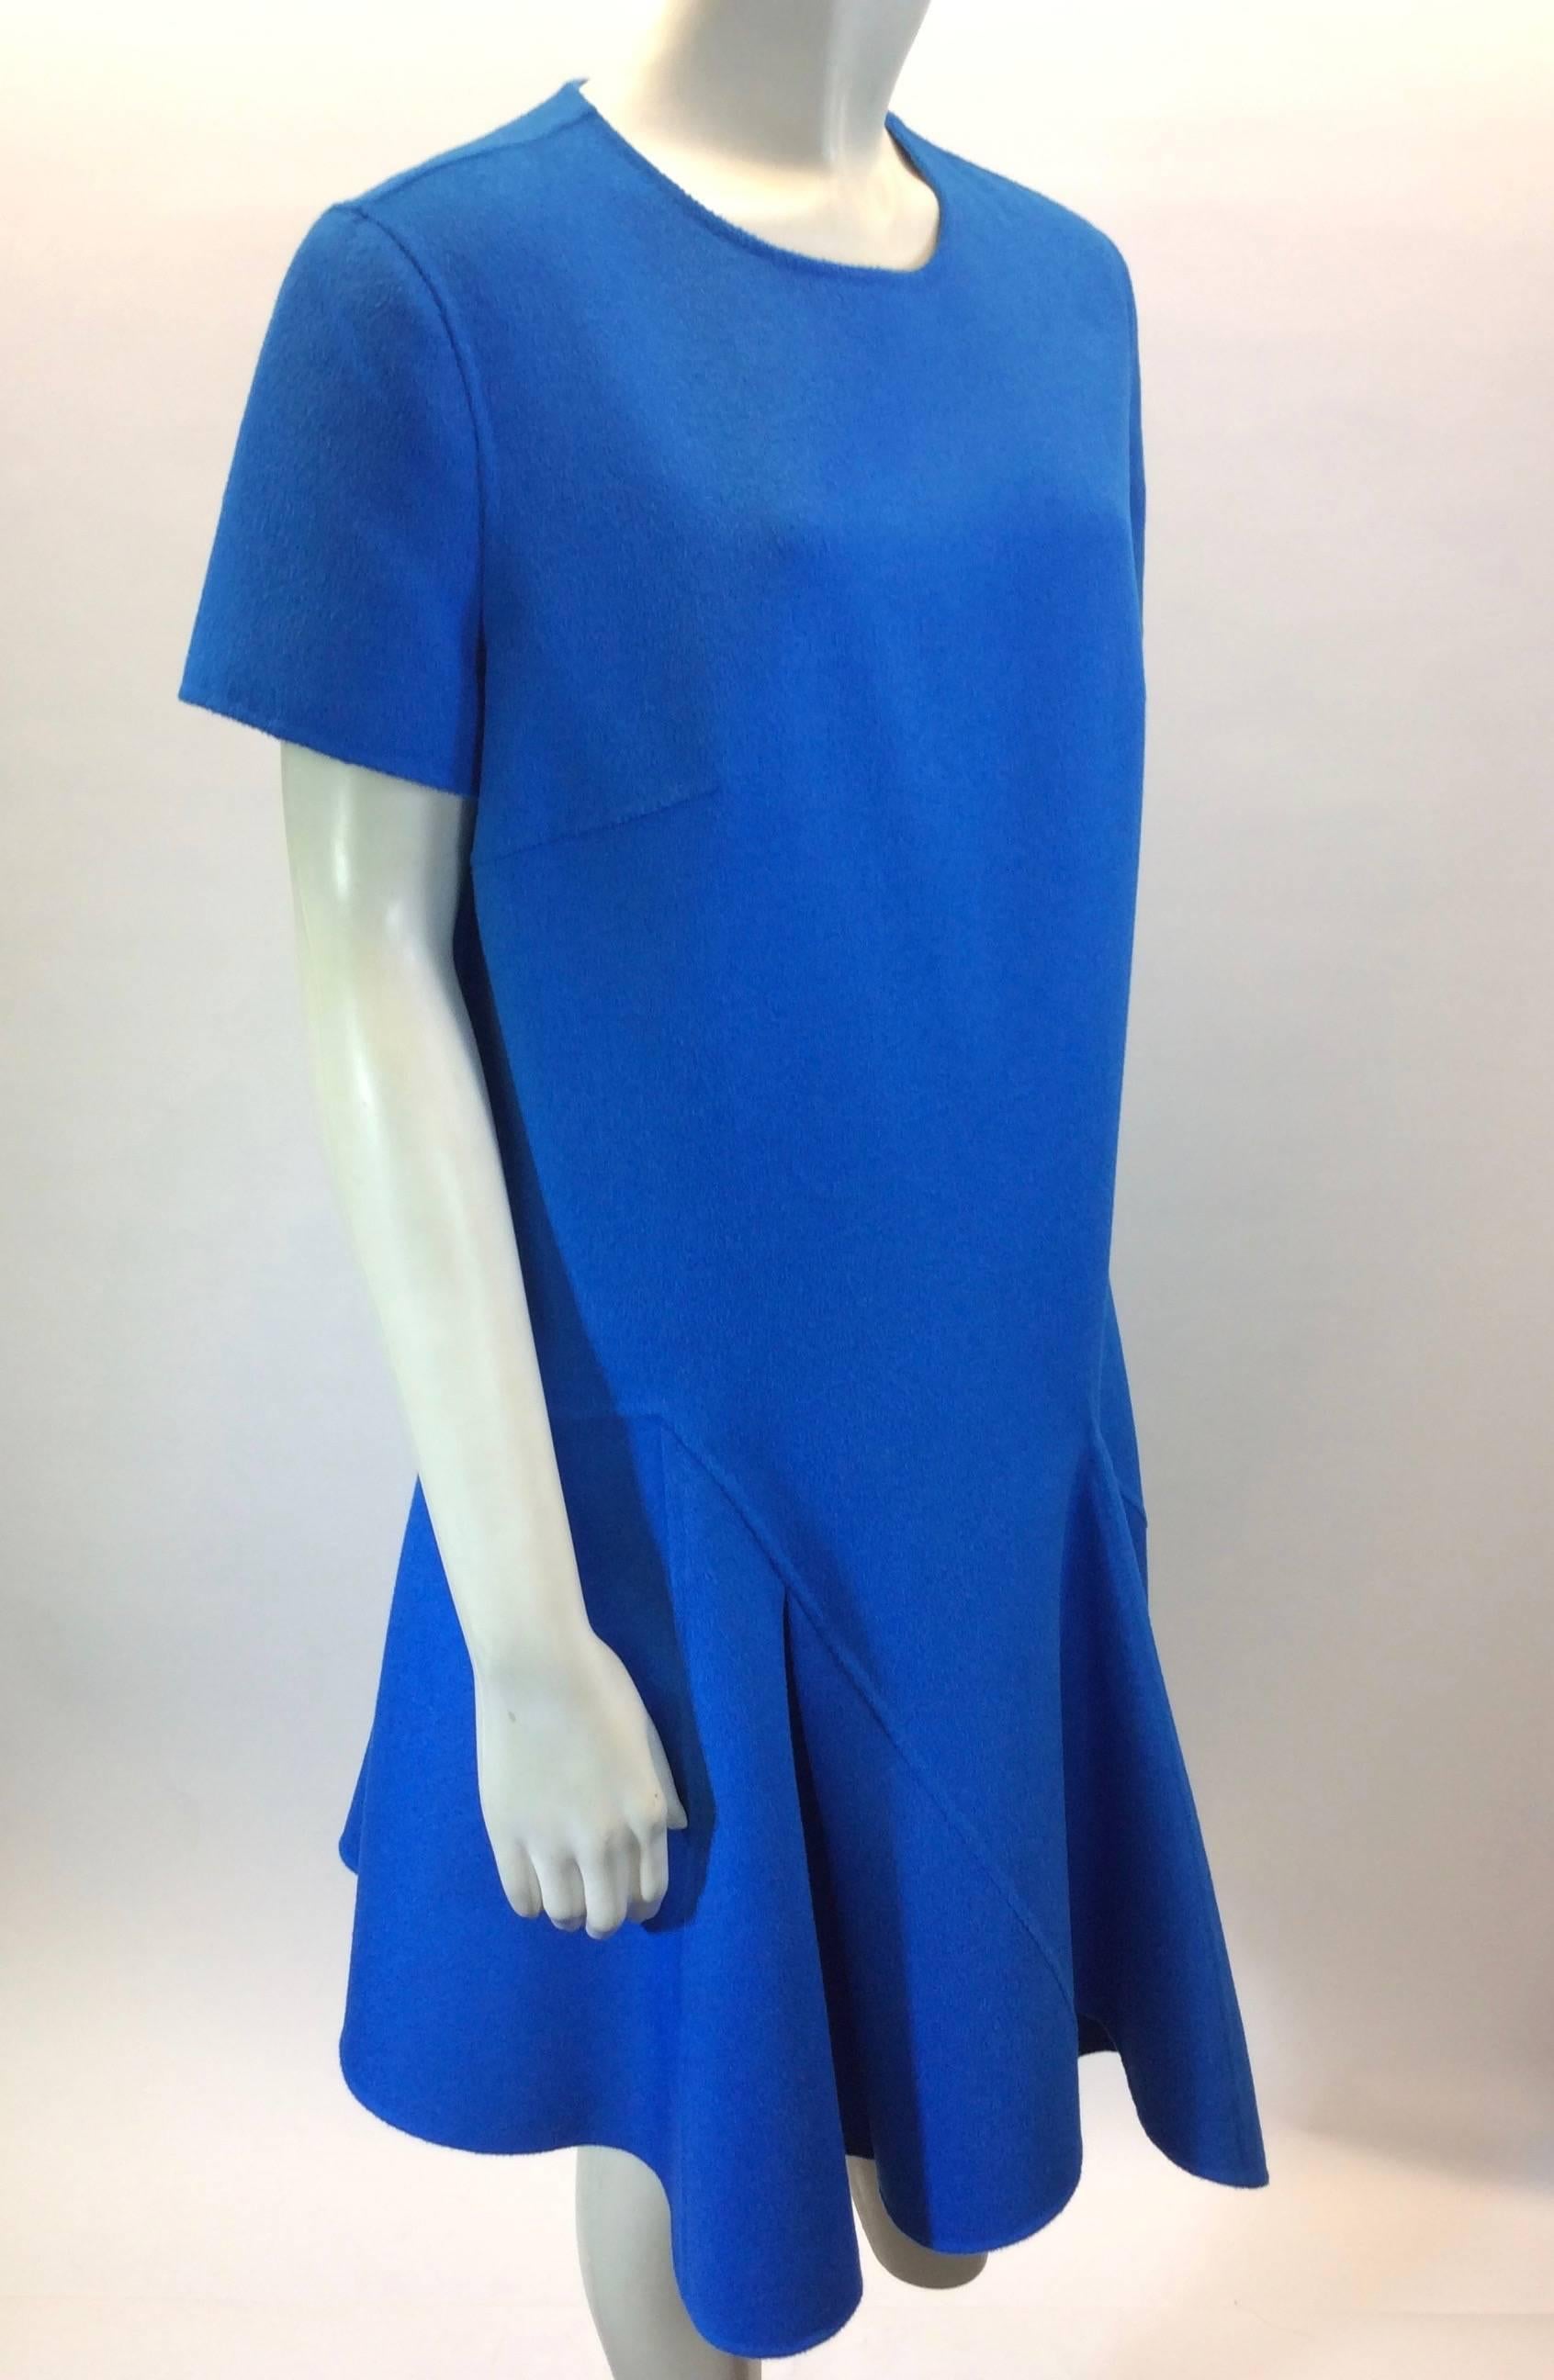 Christian Dior Dress
- 60% wool, 40% Angora
-NWT Original price: $3,300
-Size T44W. US Size 12
-Flare hem